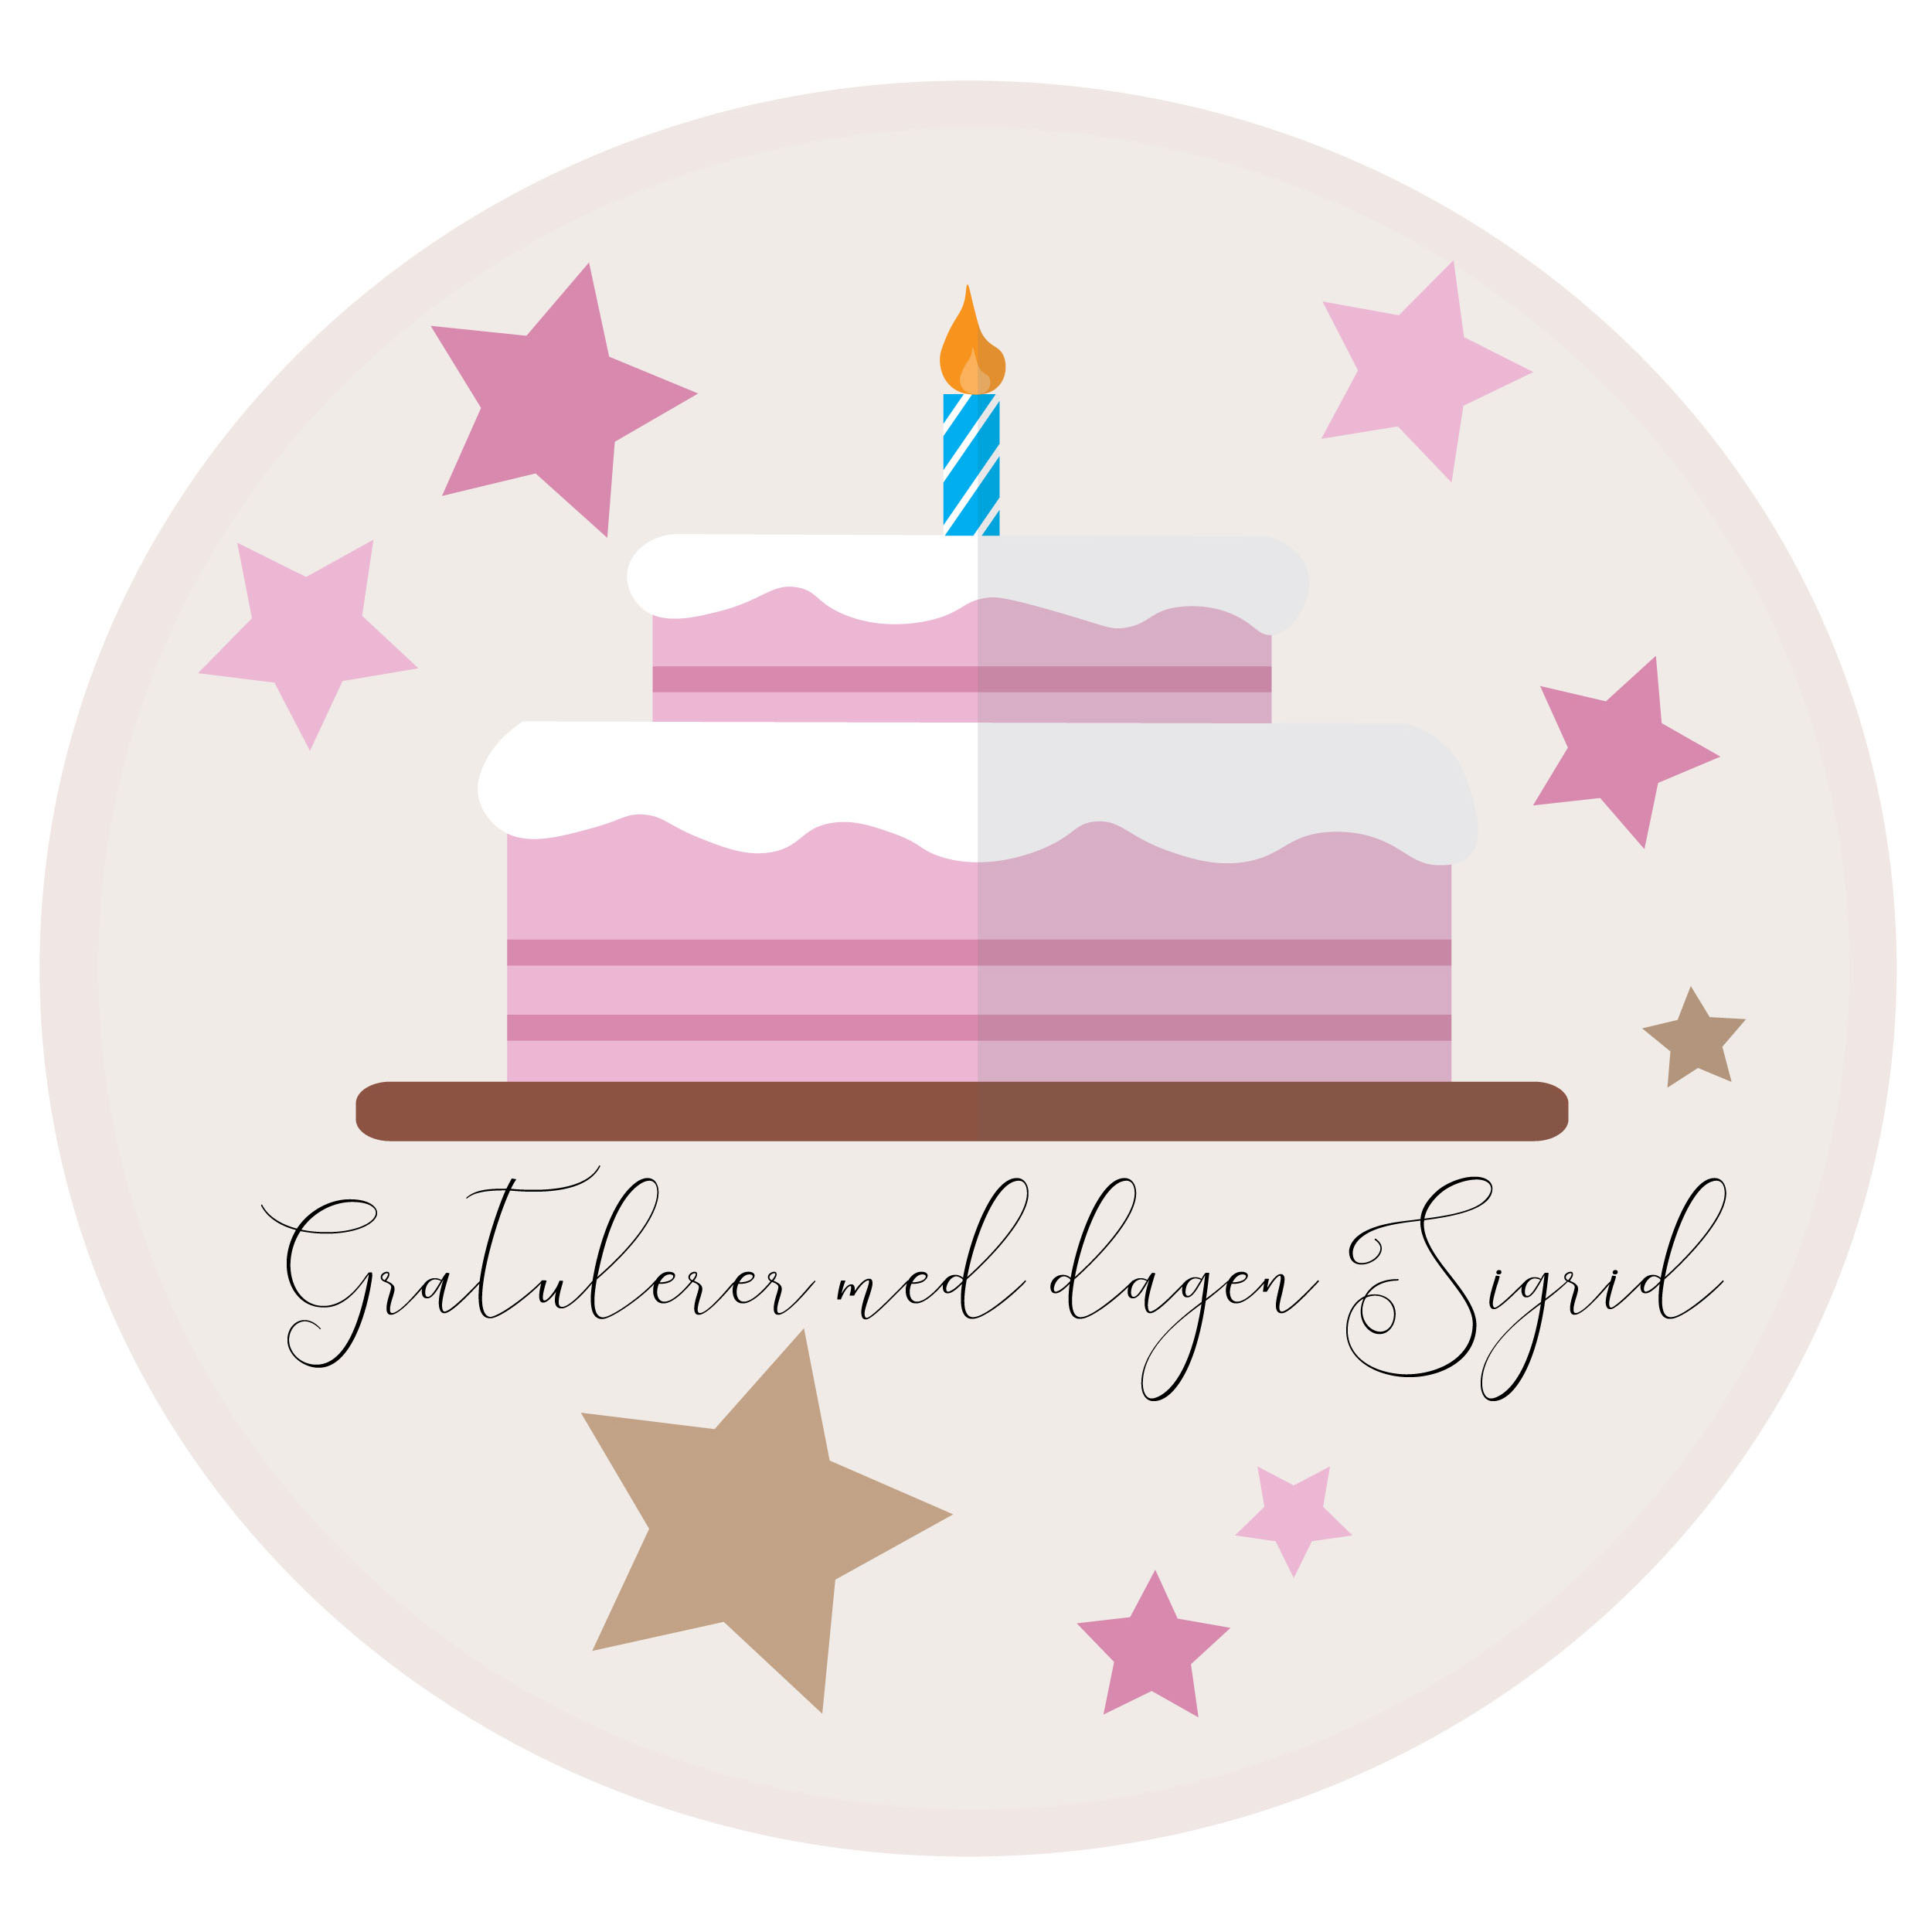 Birthday card illustration of a cake